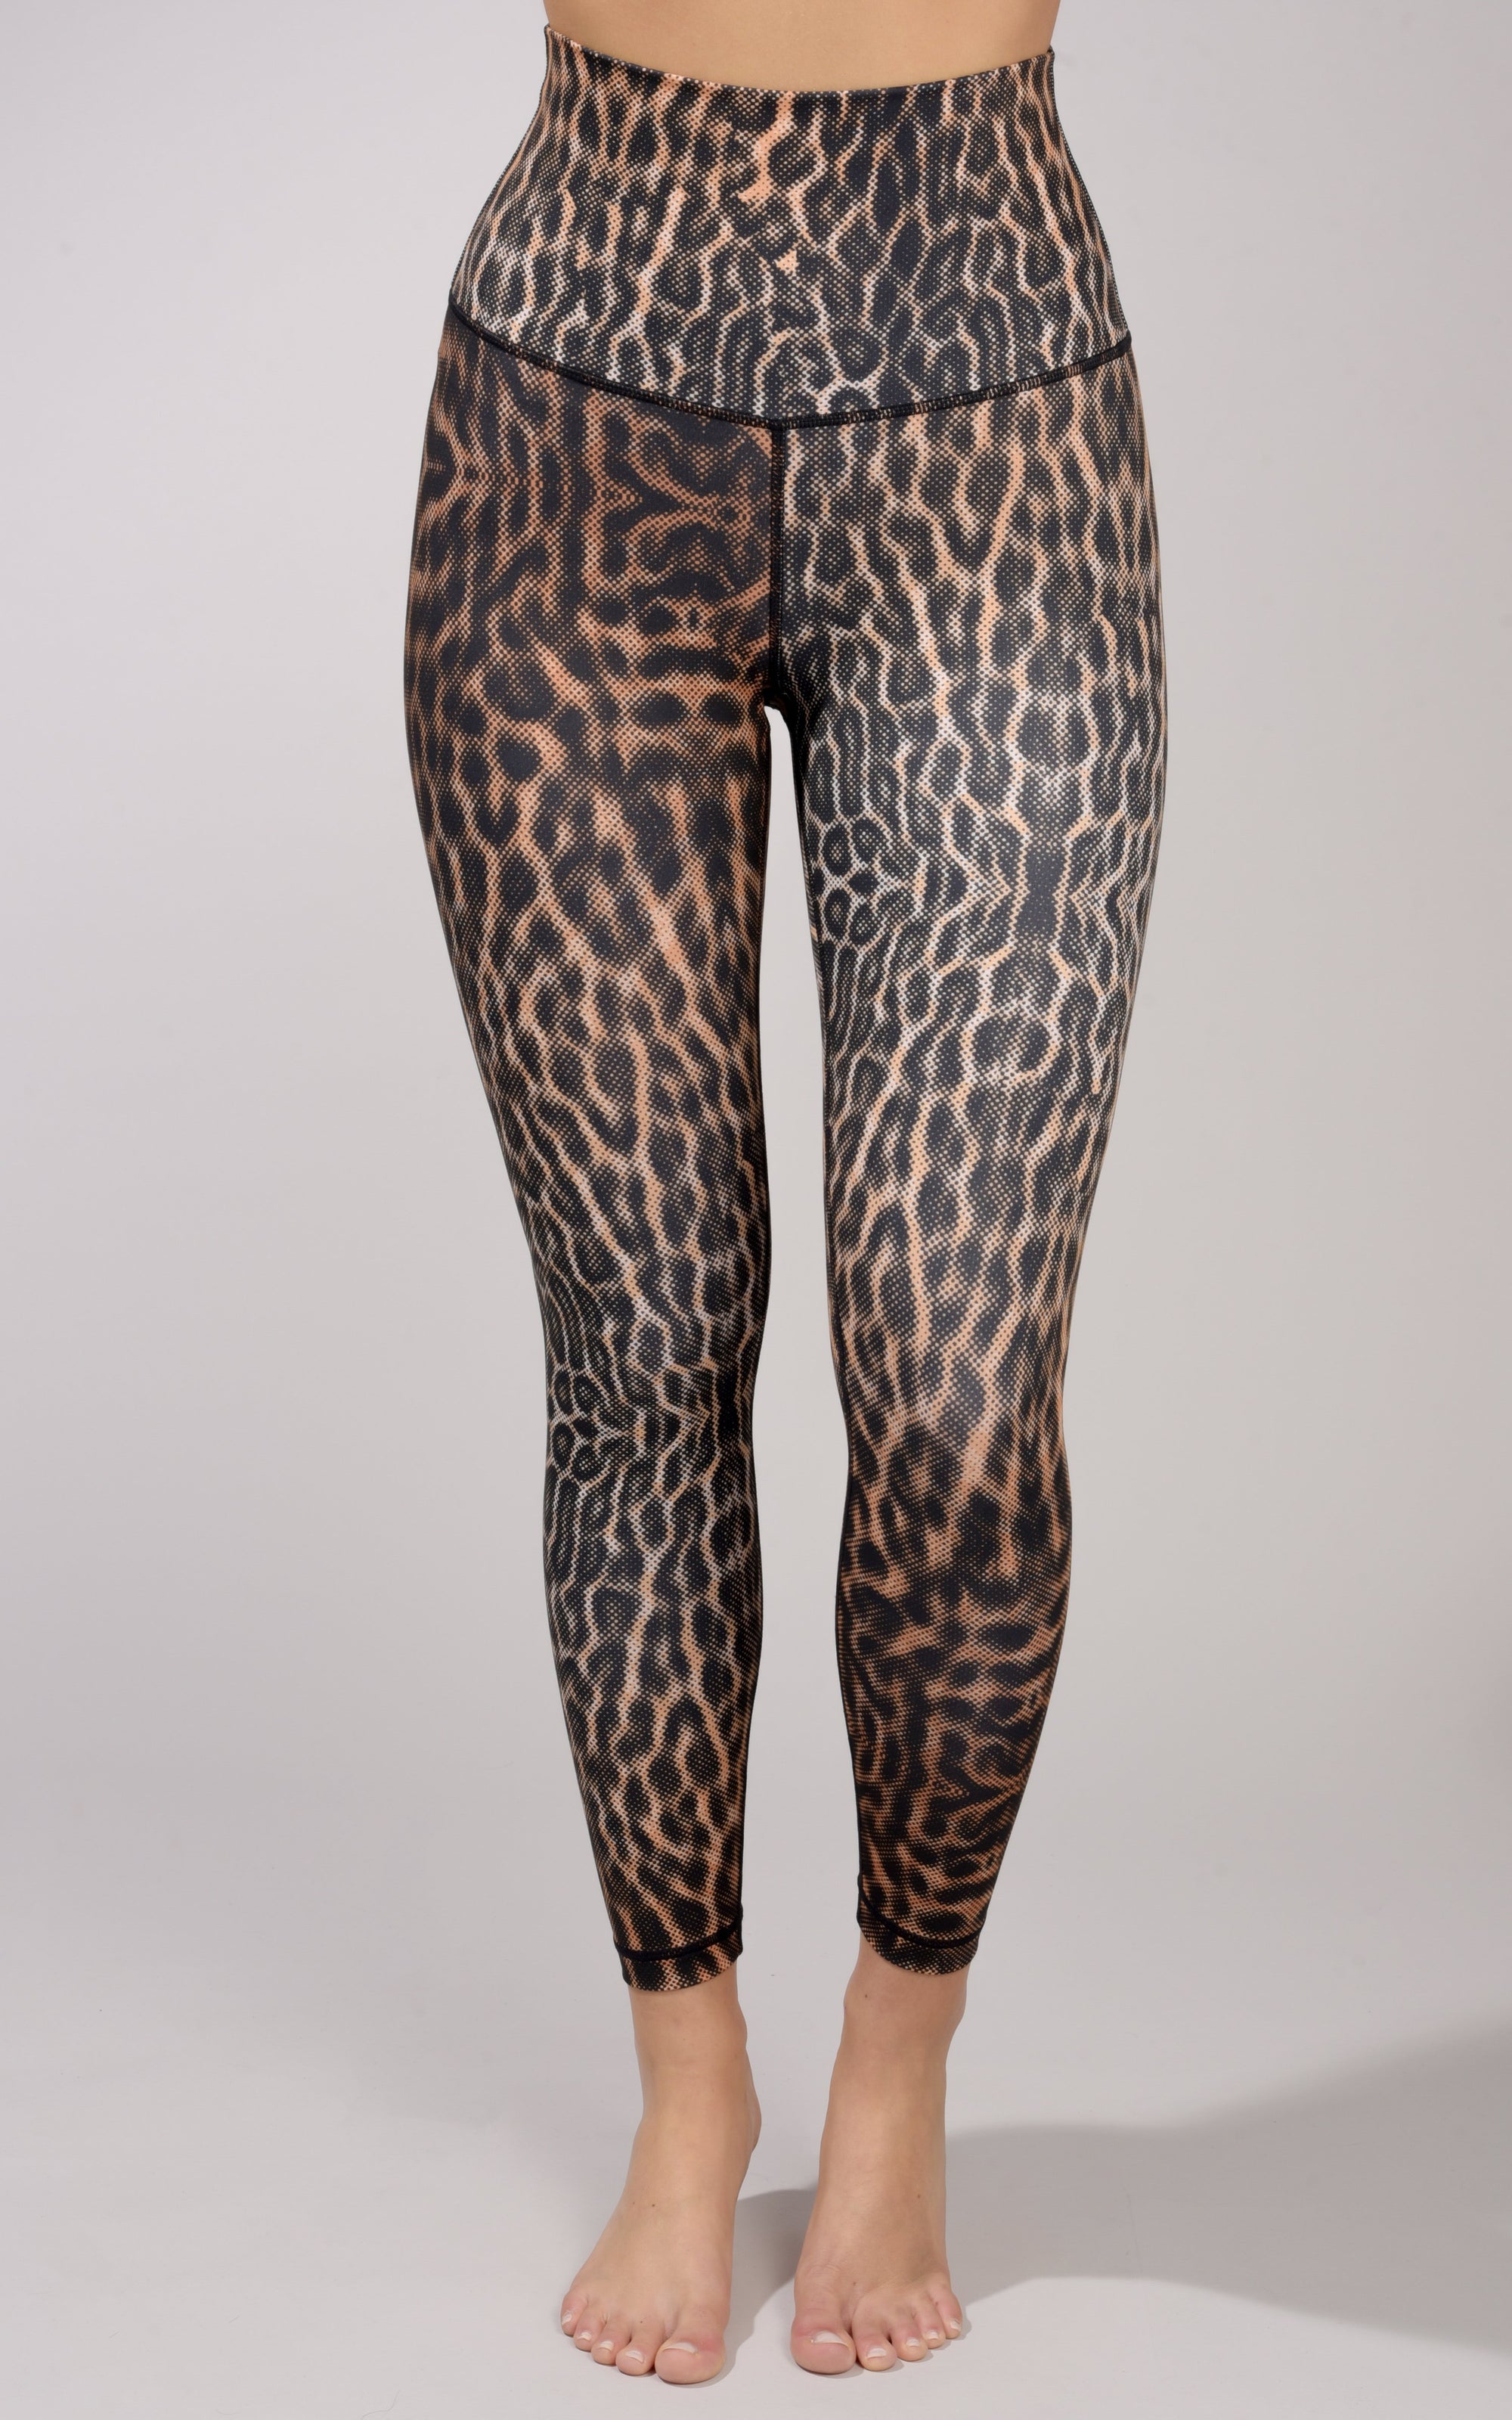 NWT offline By aerie Leggings 7/8 Legging Leopard Print Size Medium